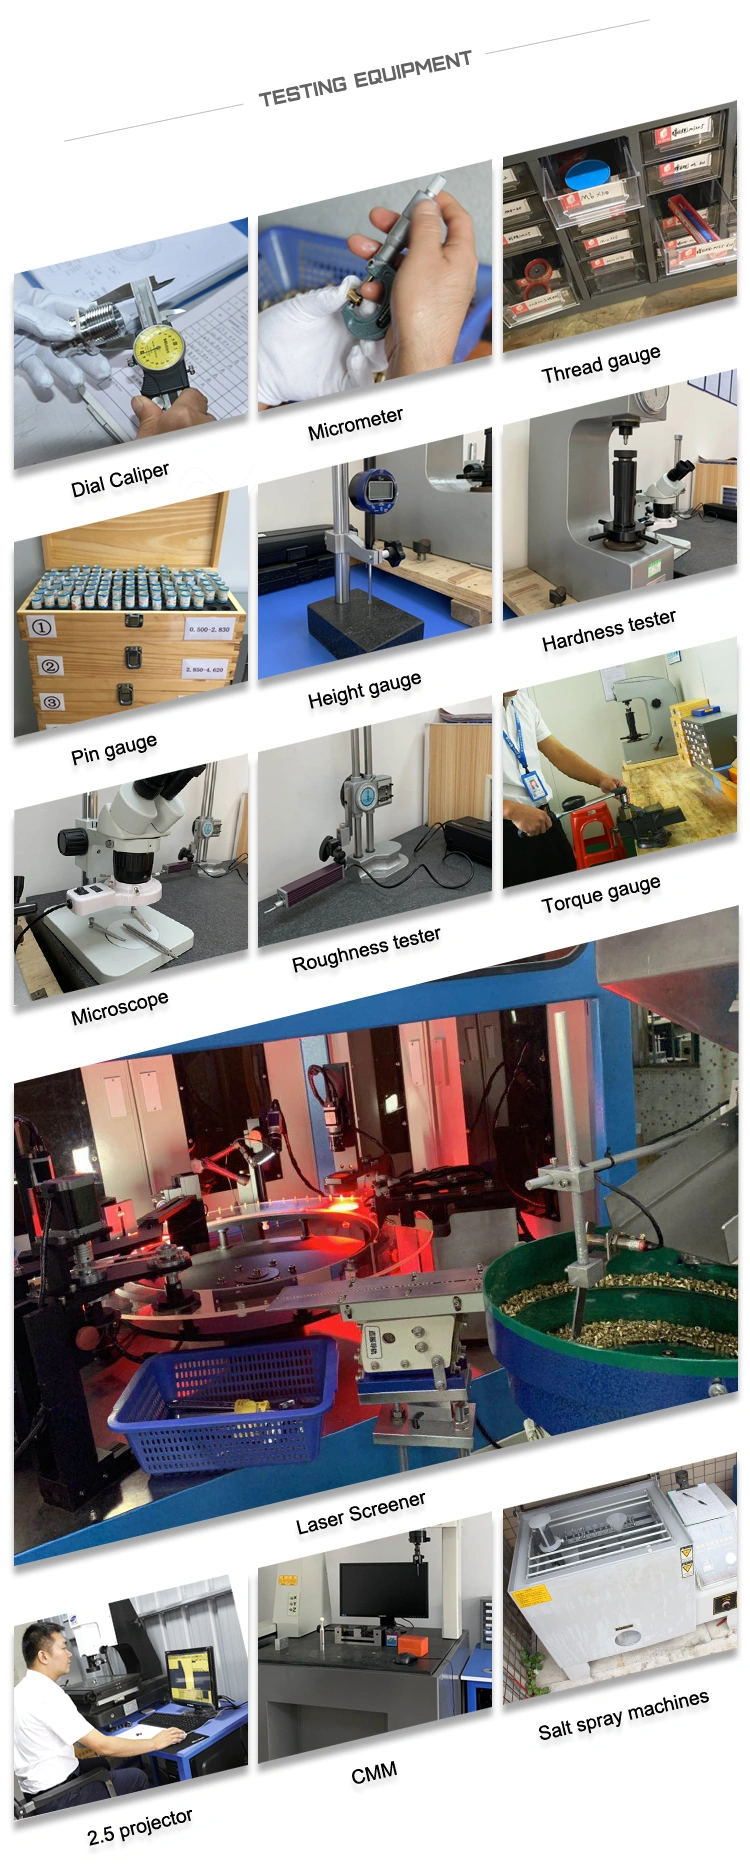 Custom CNC milling parts / CNC automatic lathe parts /precision CNC machining turning parts